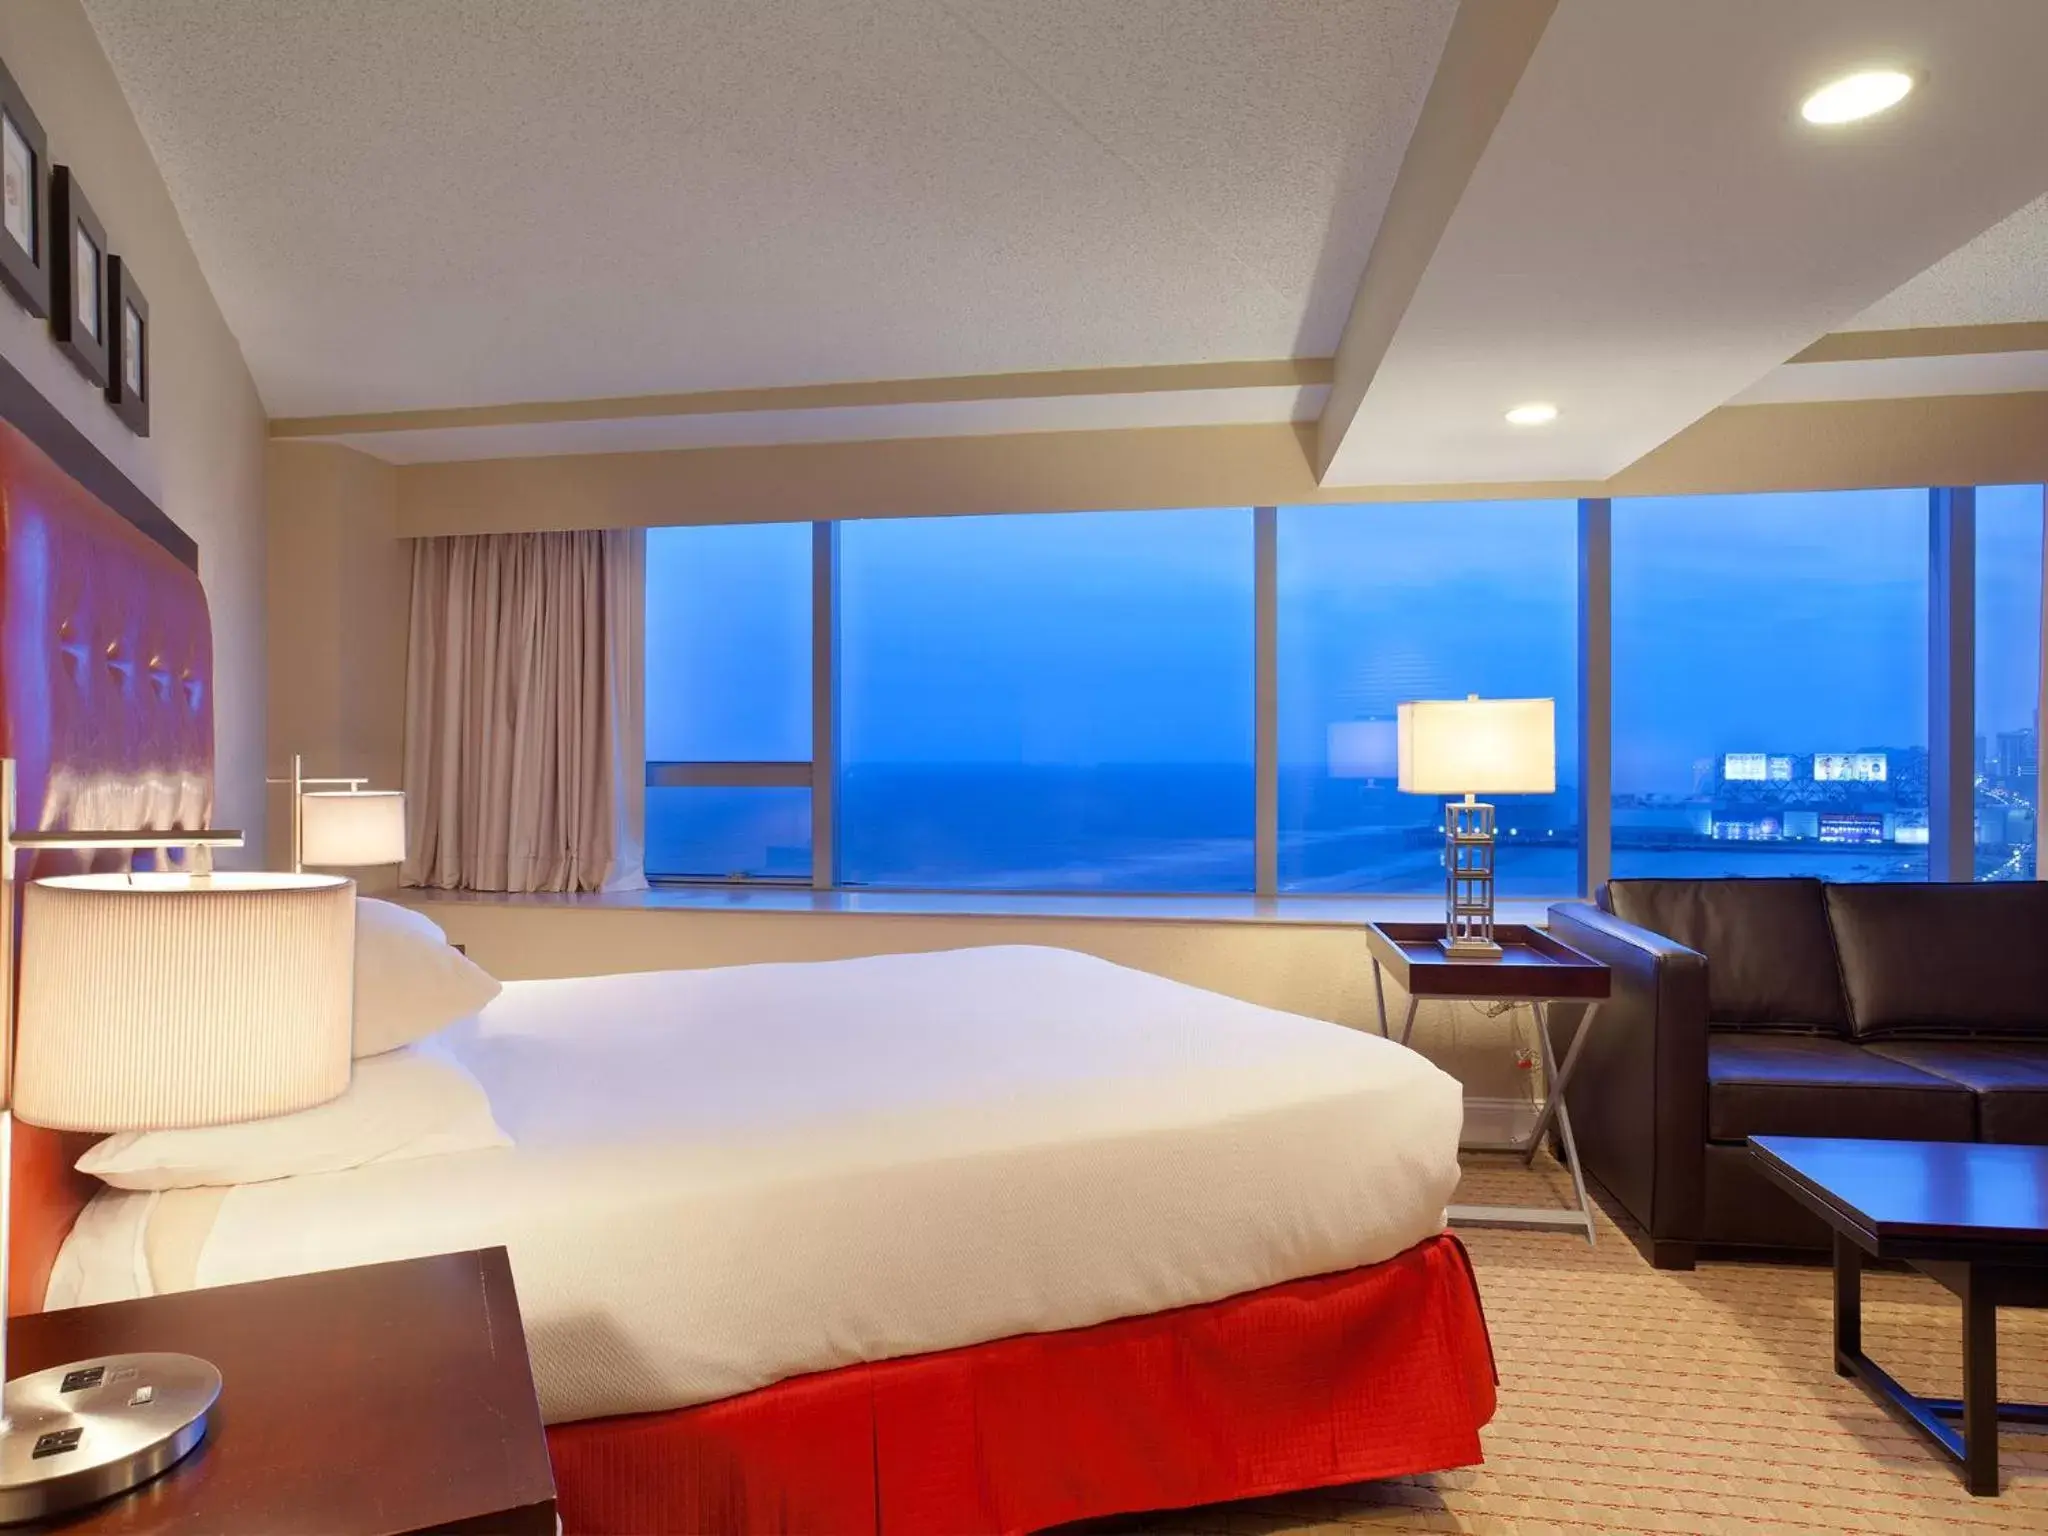 Bedroom in Boardwalk Resorts at Atlantic Palace